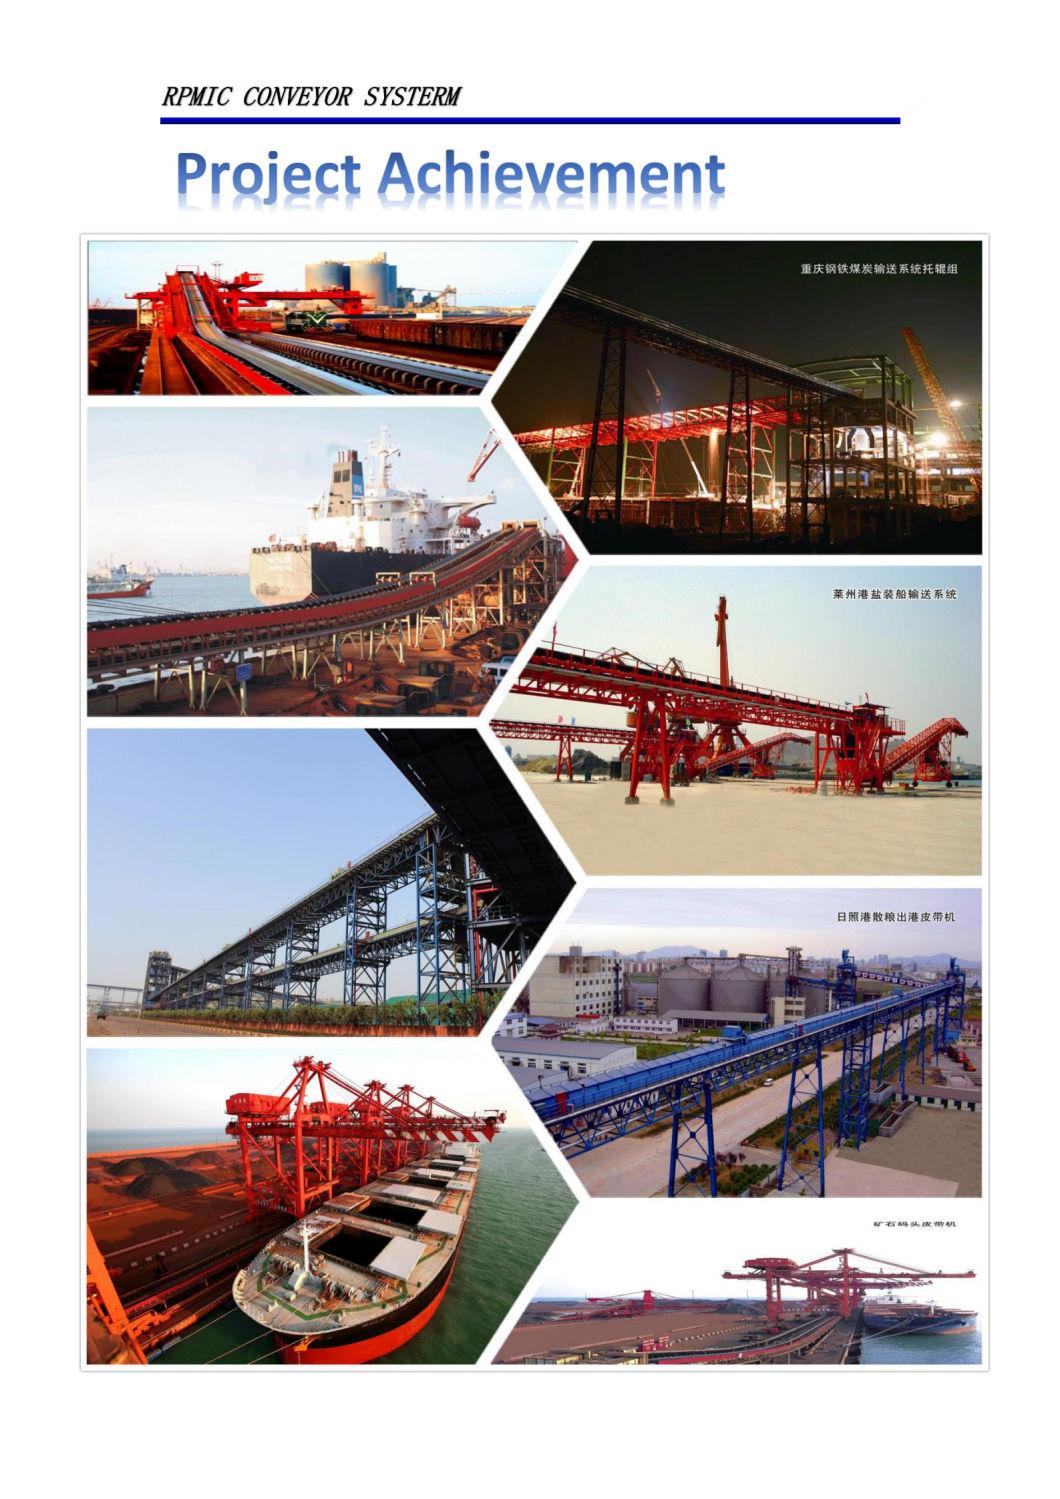 JIS/DIN Standard Steel Idler for Conveyor for Cement, Port, Power Plant Industries